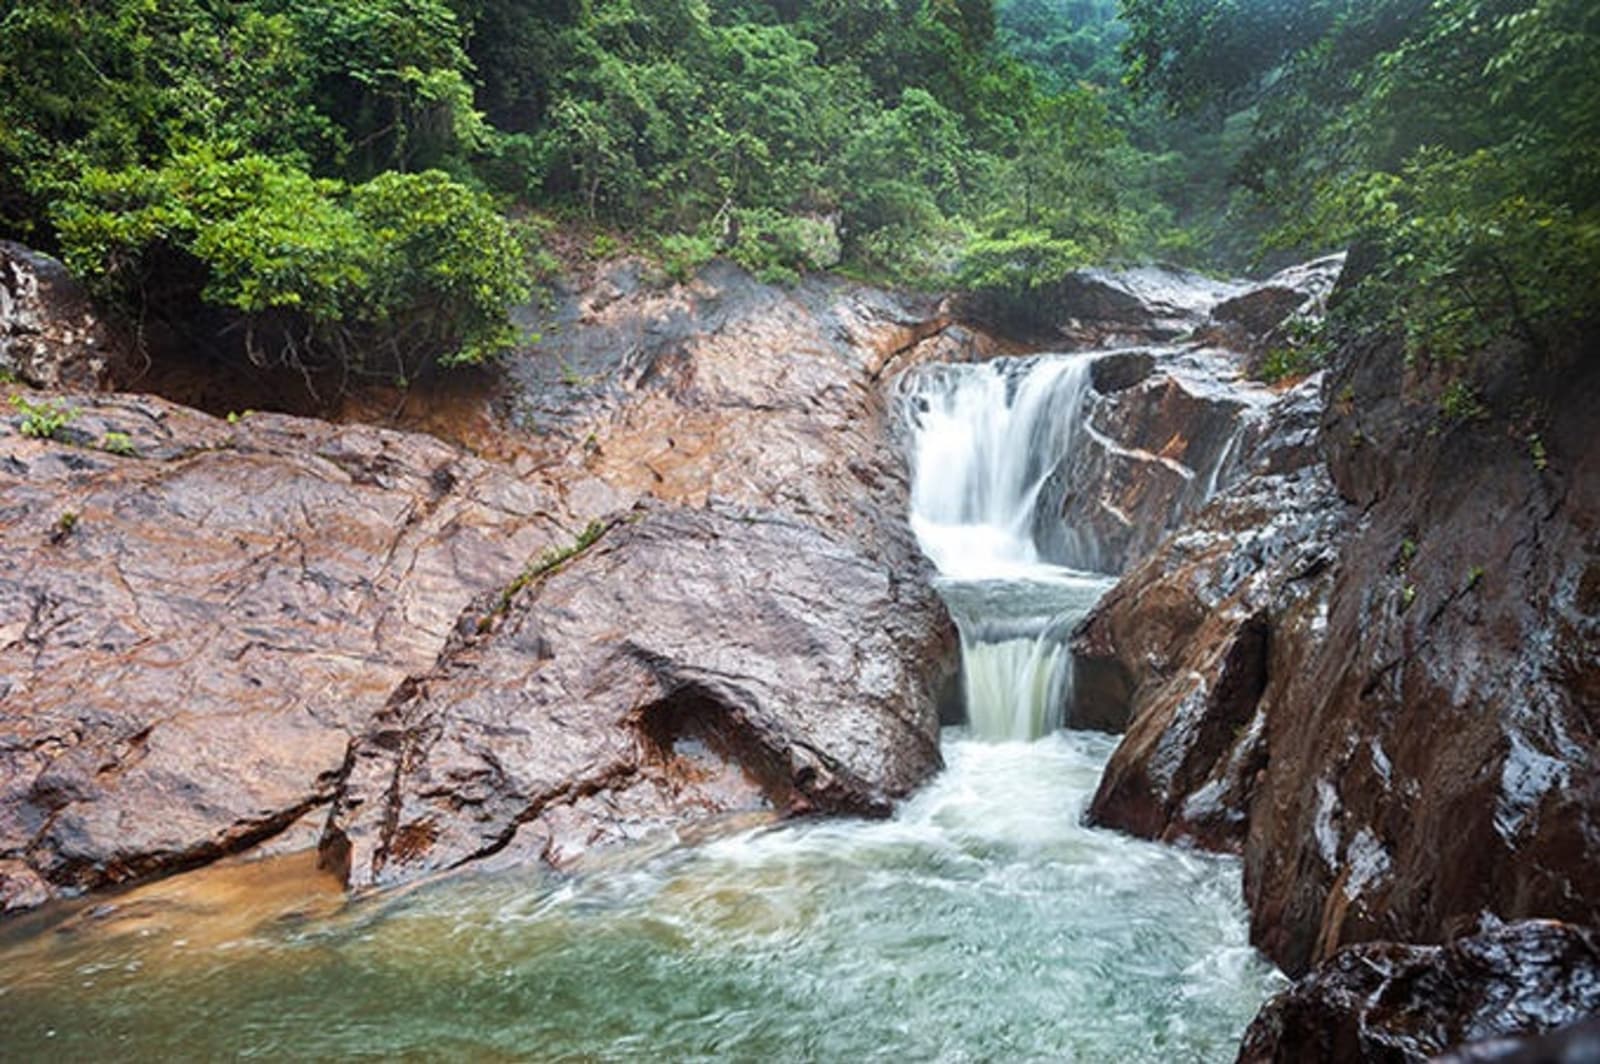 rs-than-mayom-waterfall-koh-chang-thailand-shutterstock_308705813.jpg